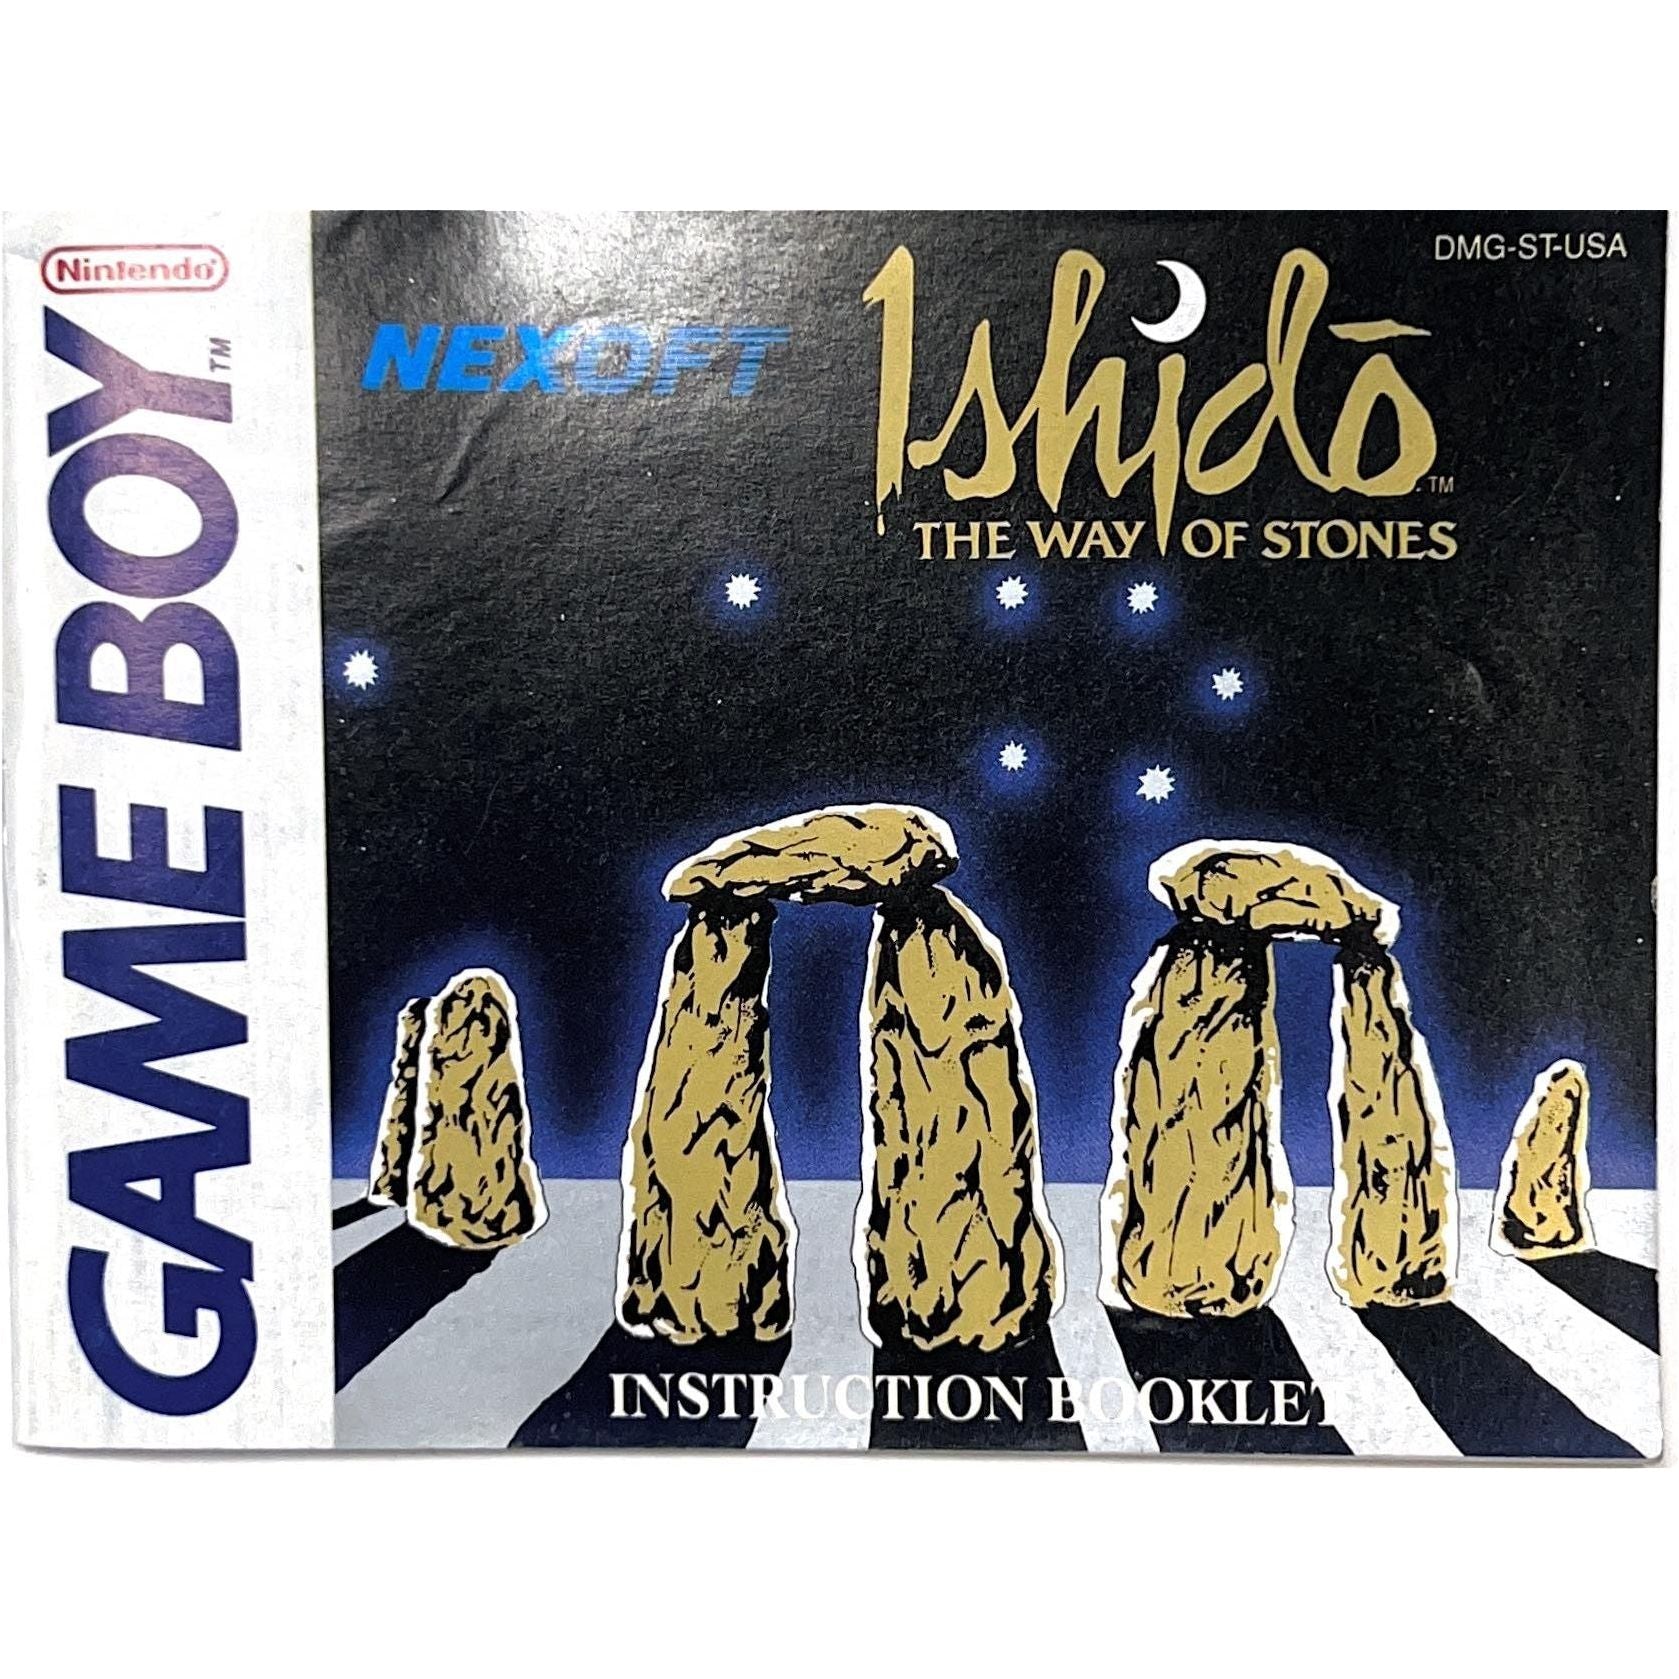 GB - Ishido The Way of Stones (Manual)